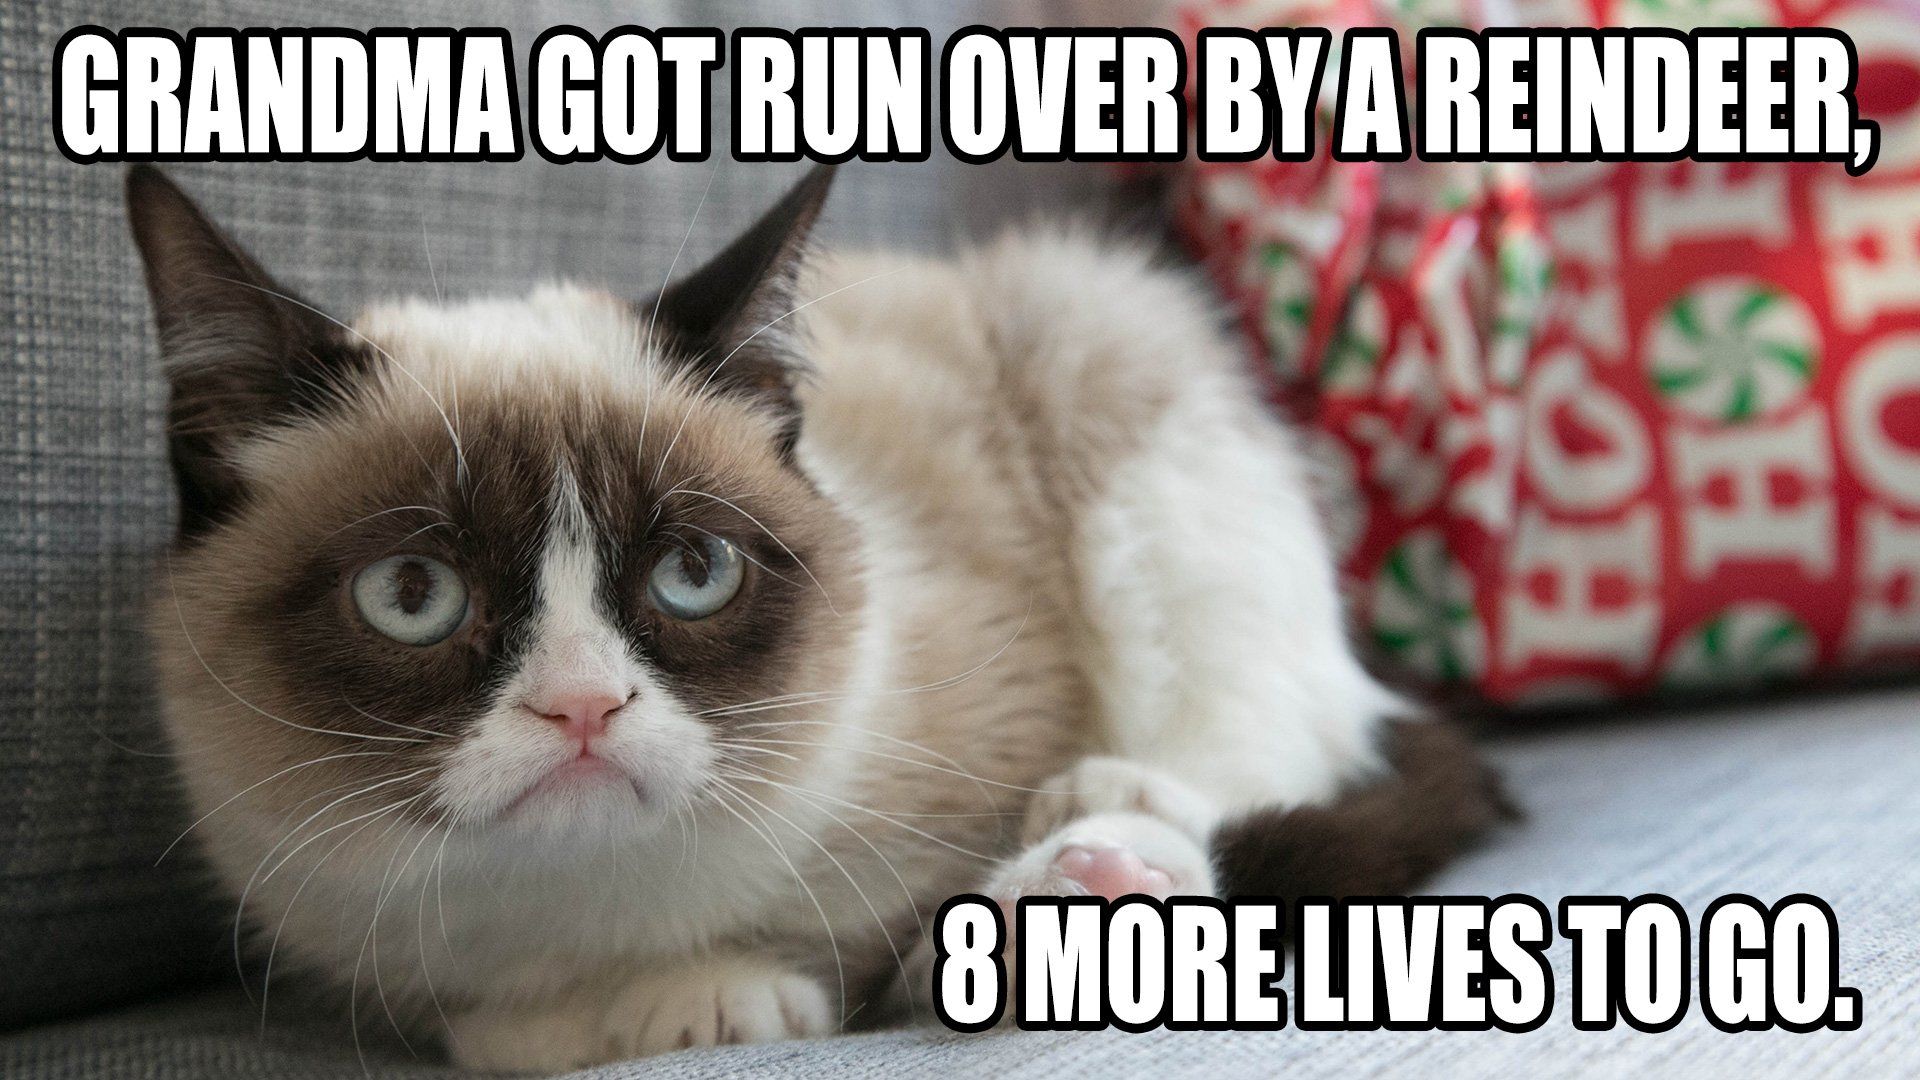 Cat meme quote funny humor grumpy.